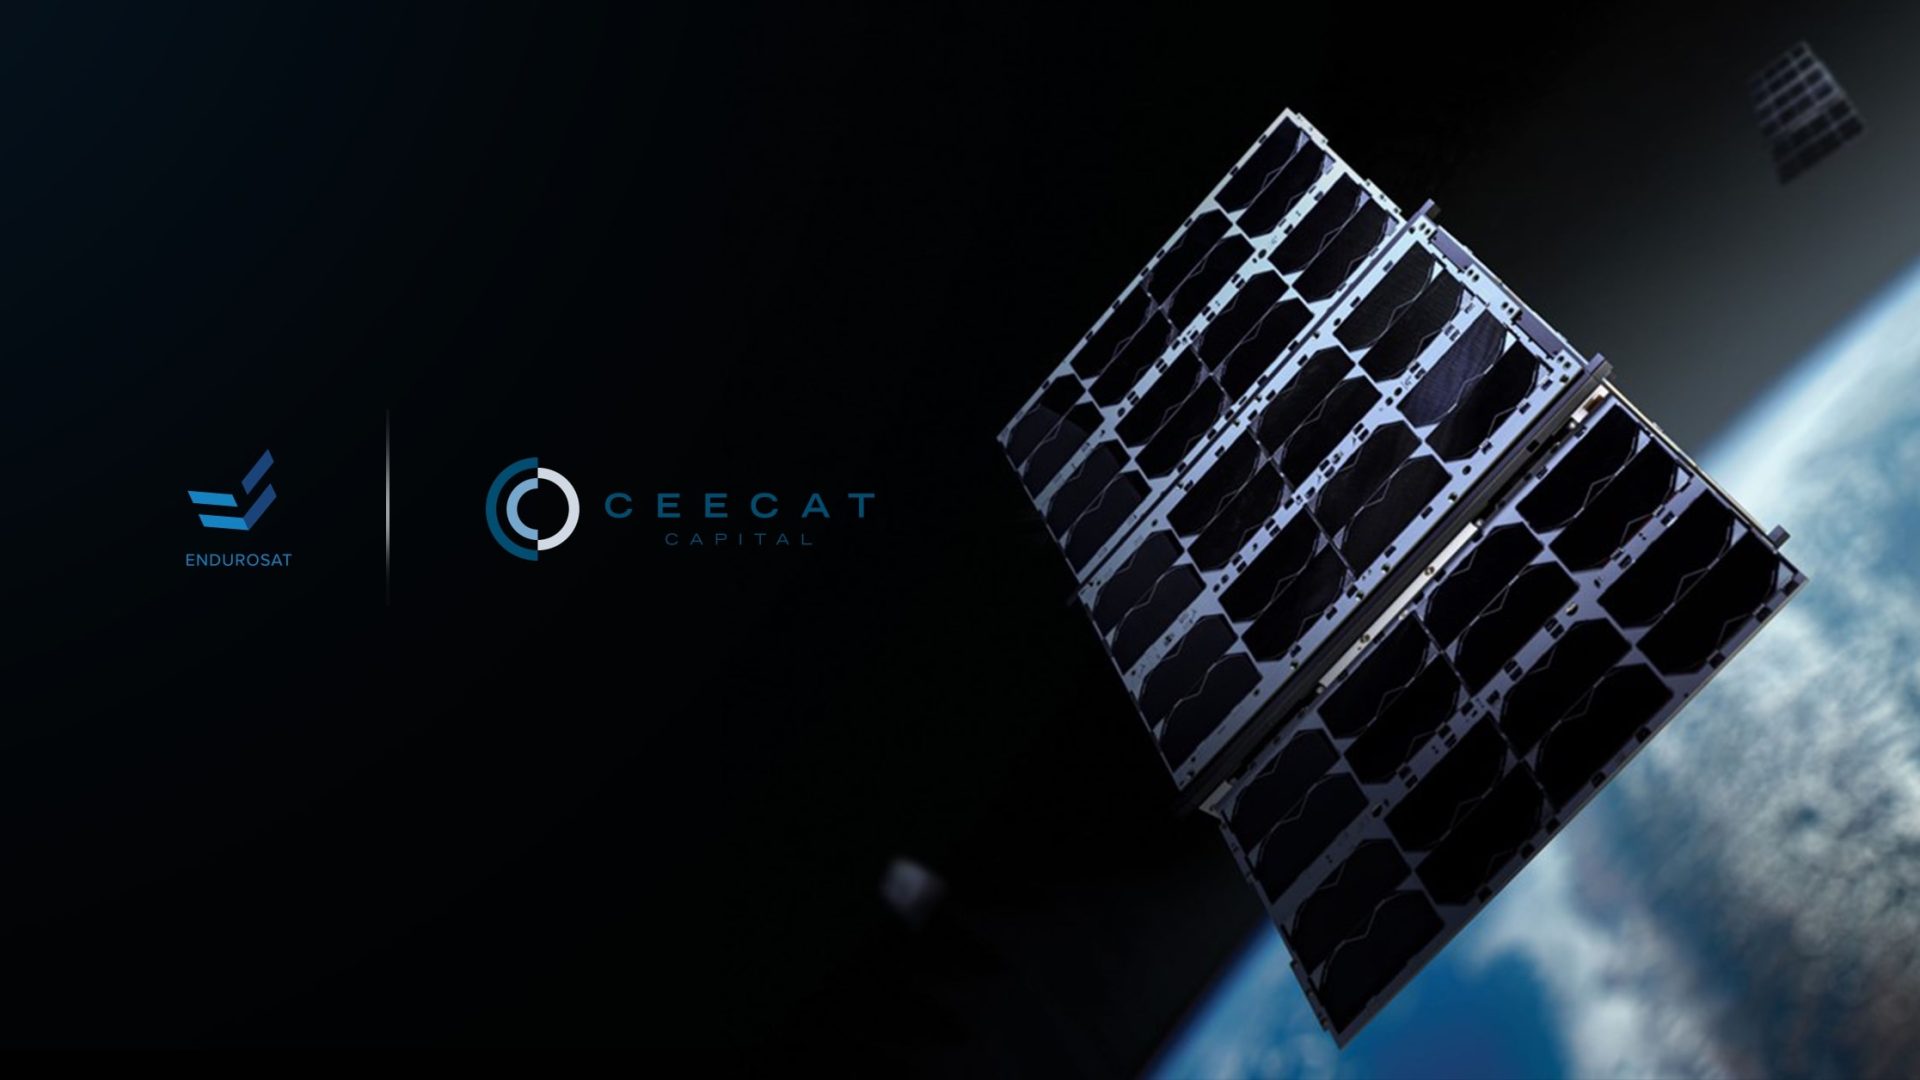 EnduroSat raises 10m USD Series A led by CEECAT Capital